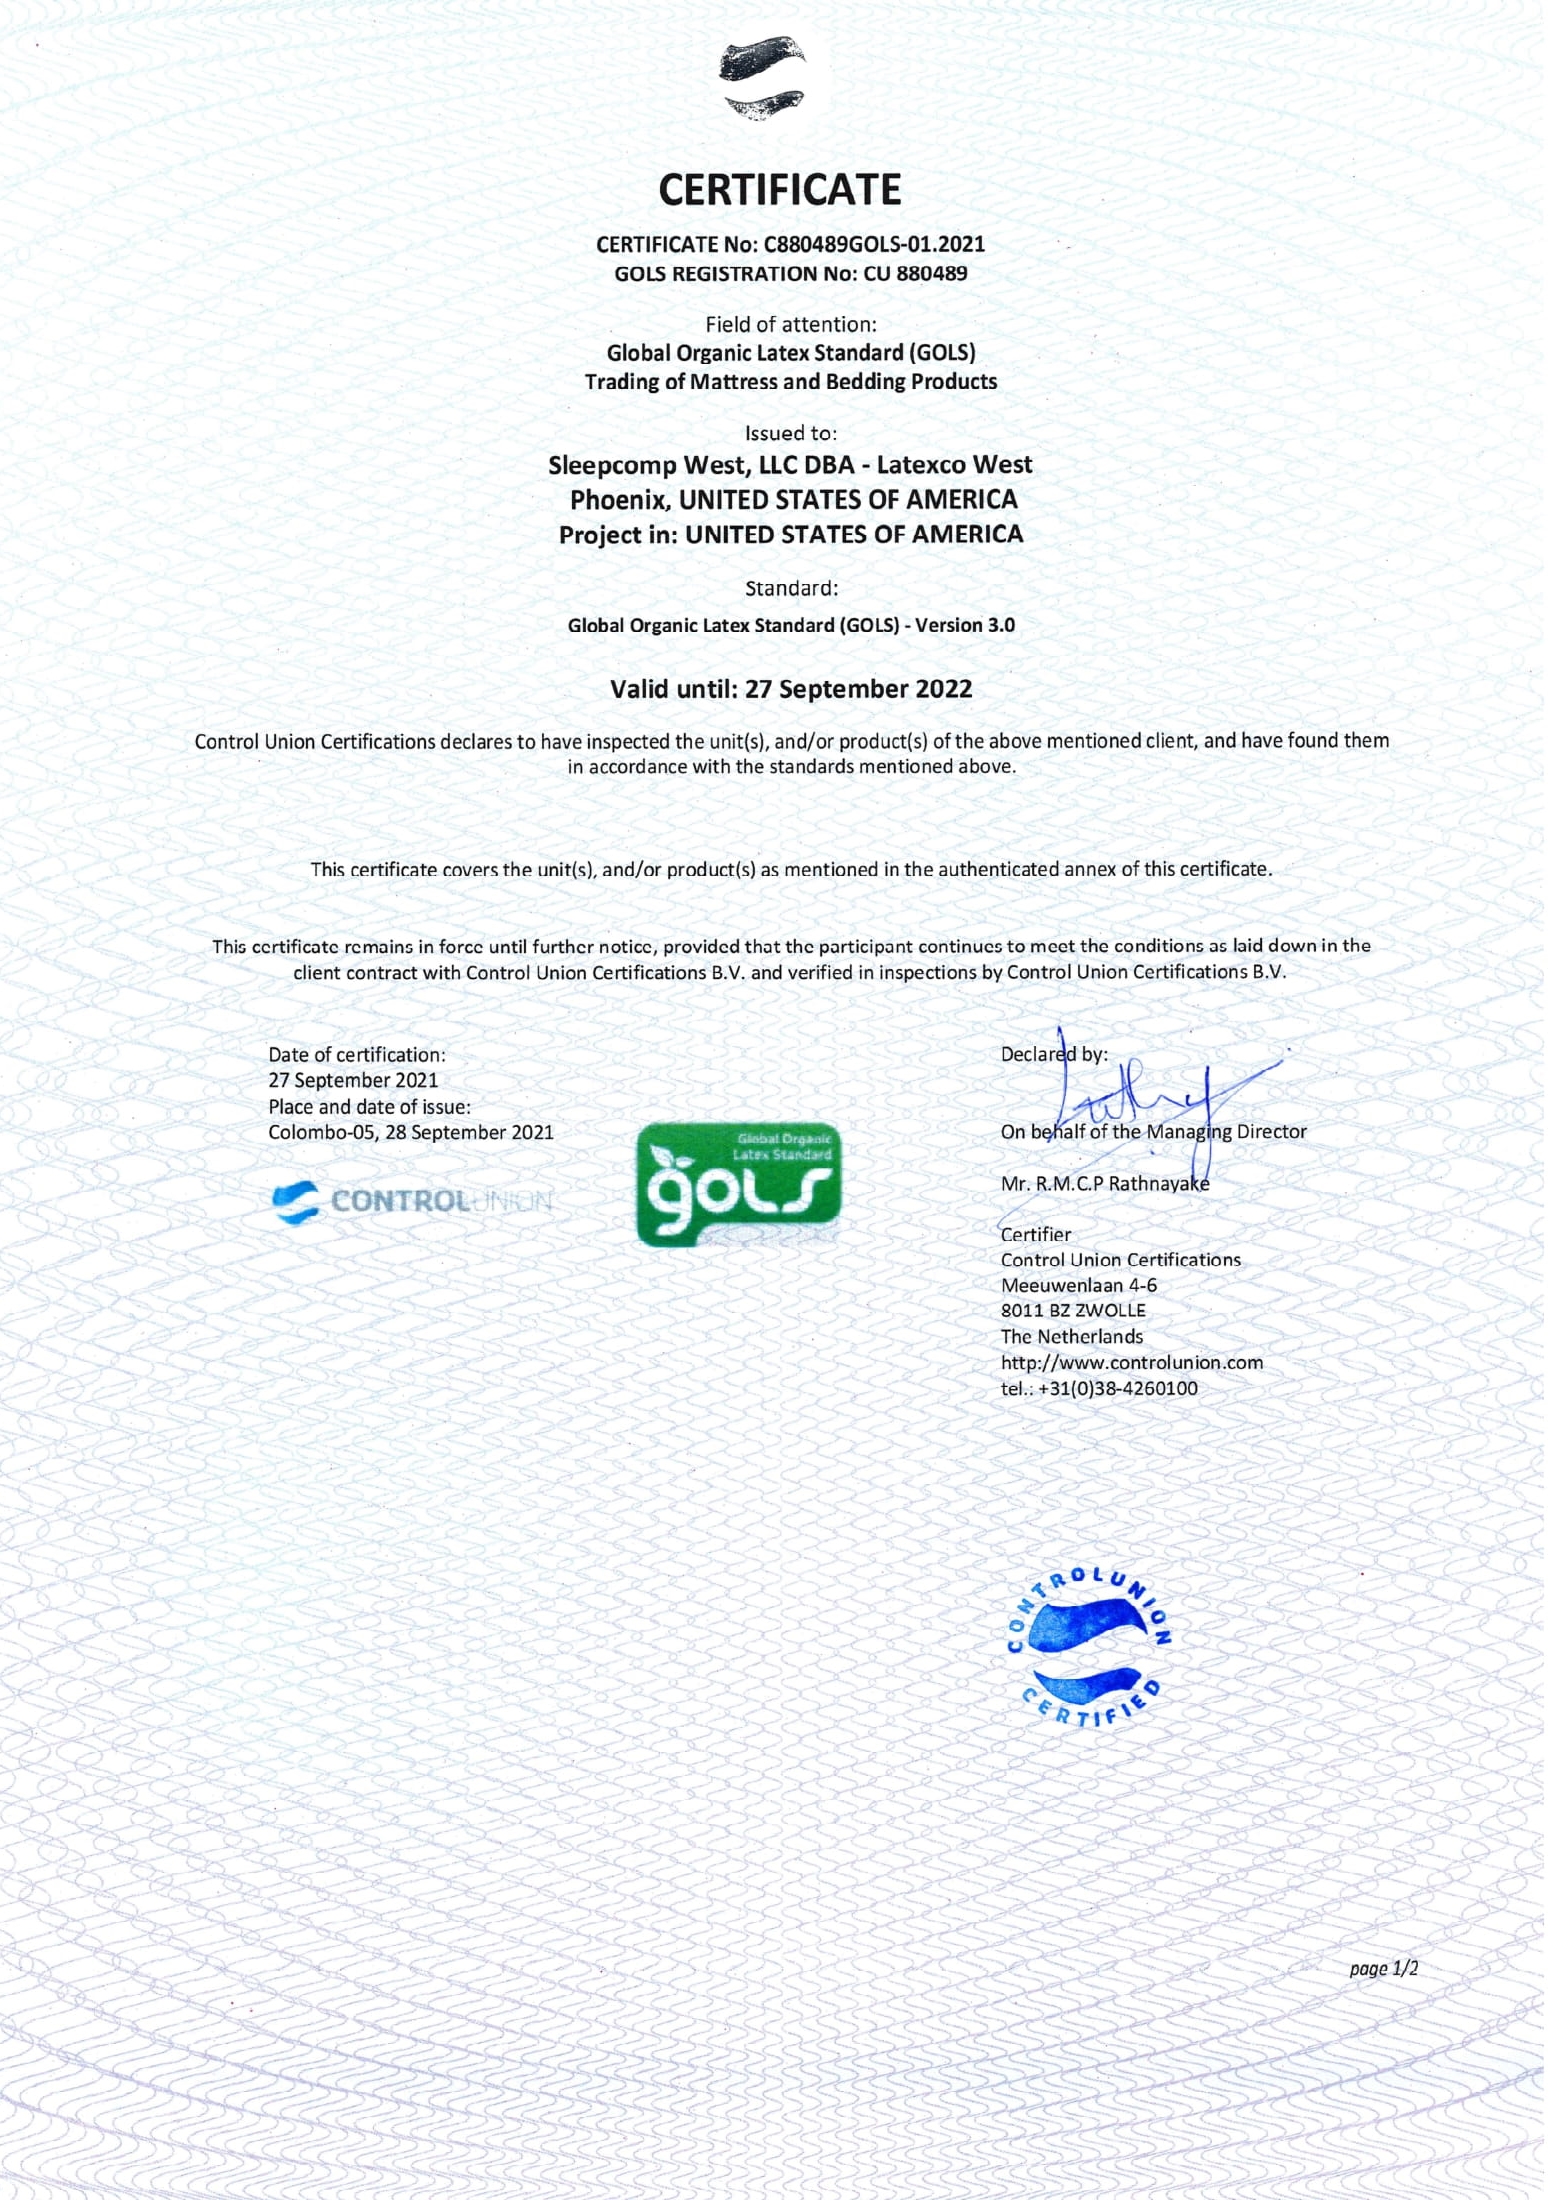 Global Organic Latex Certification